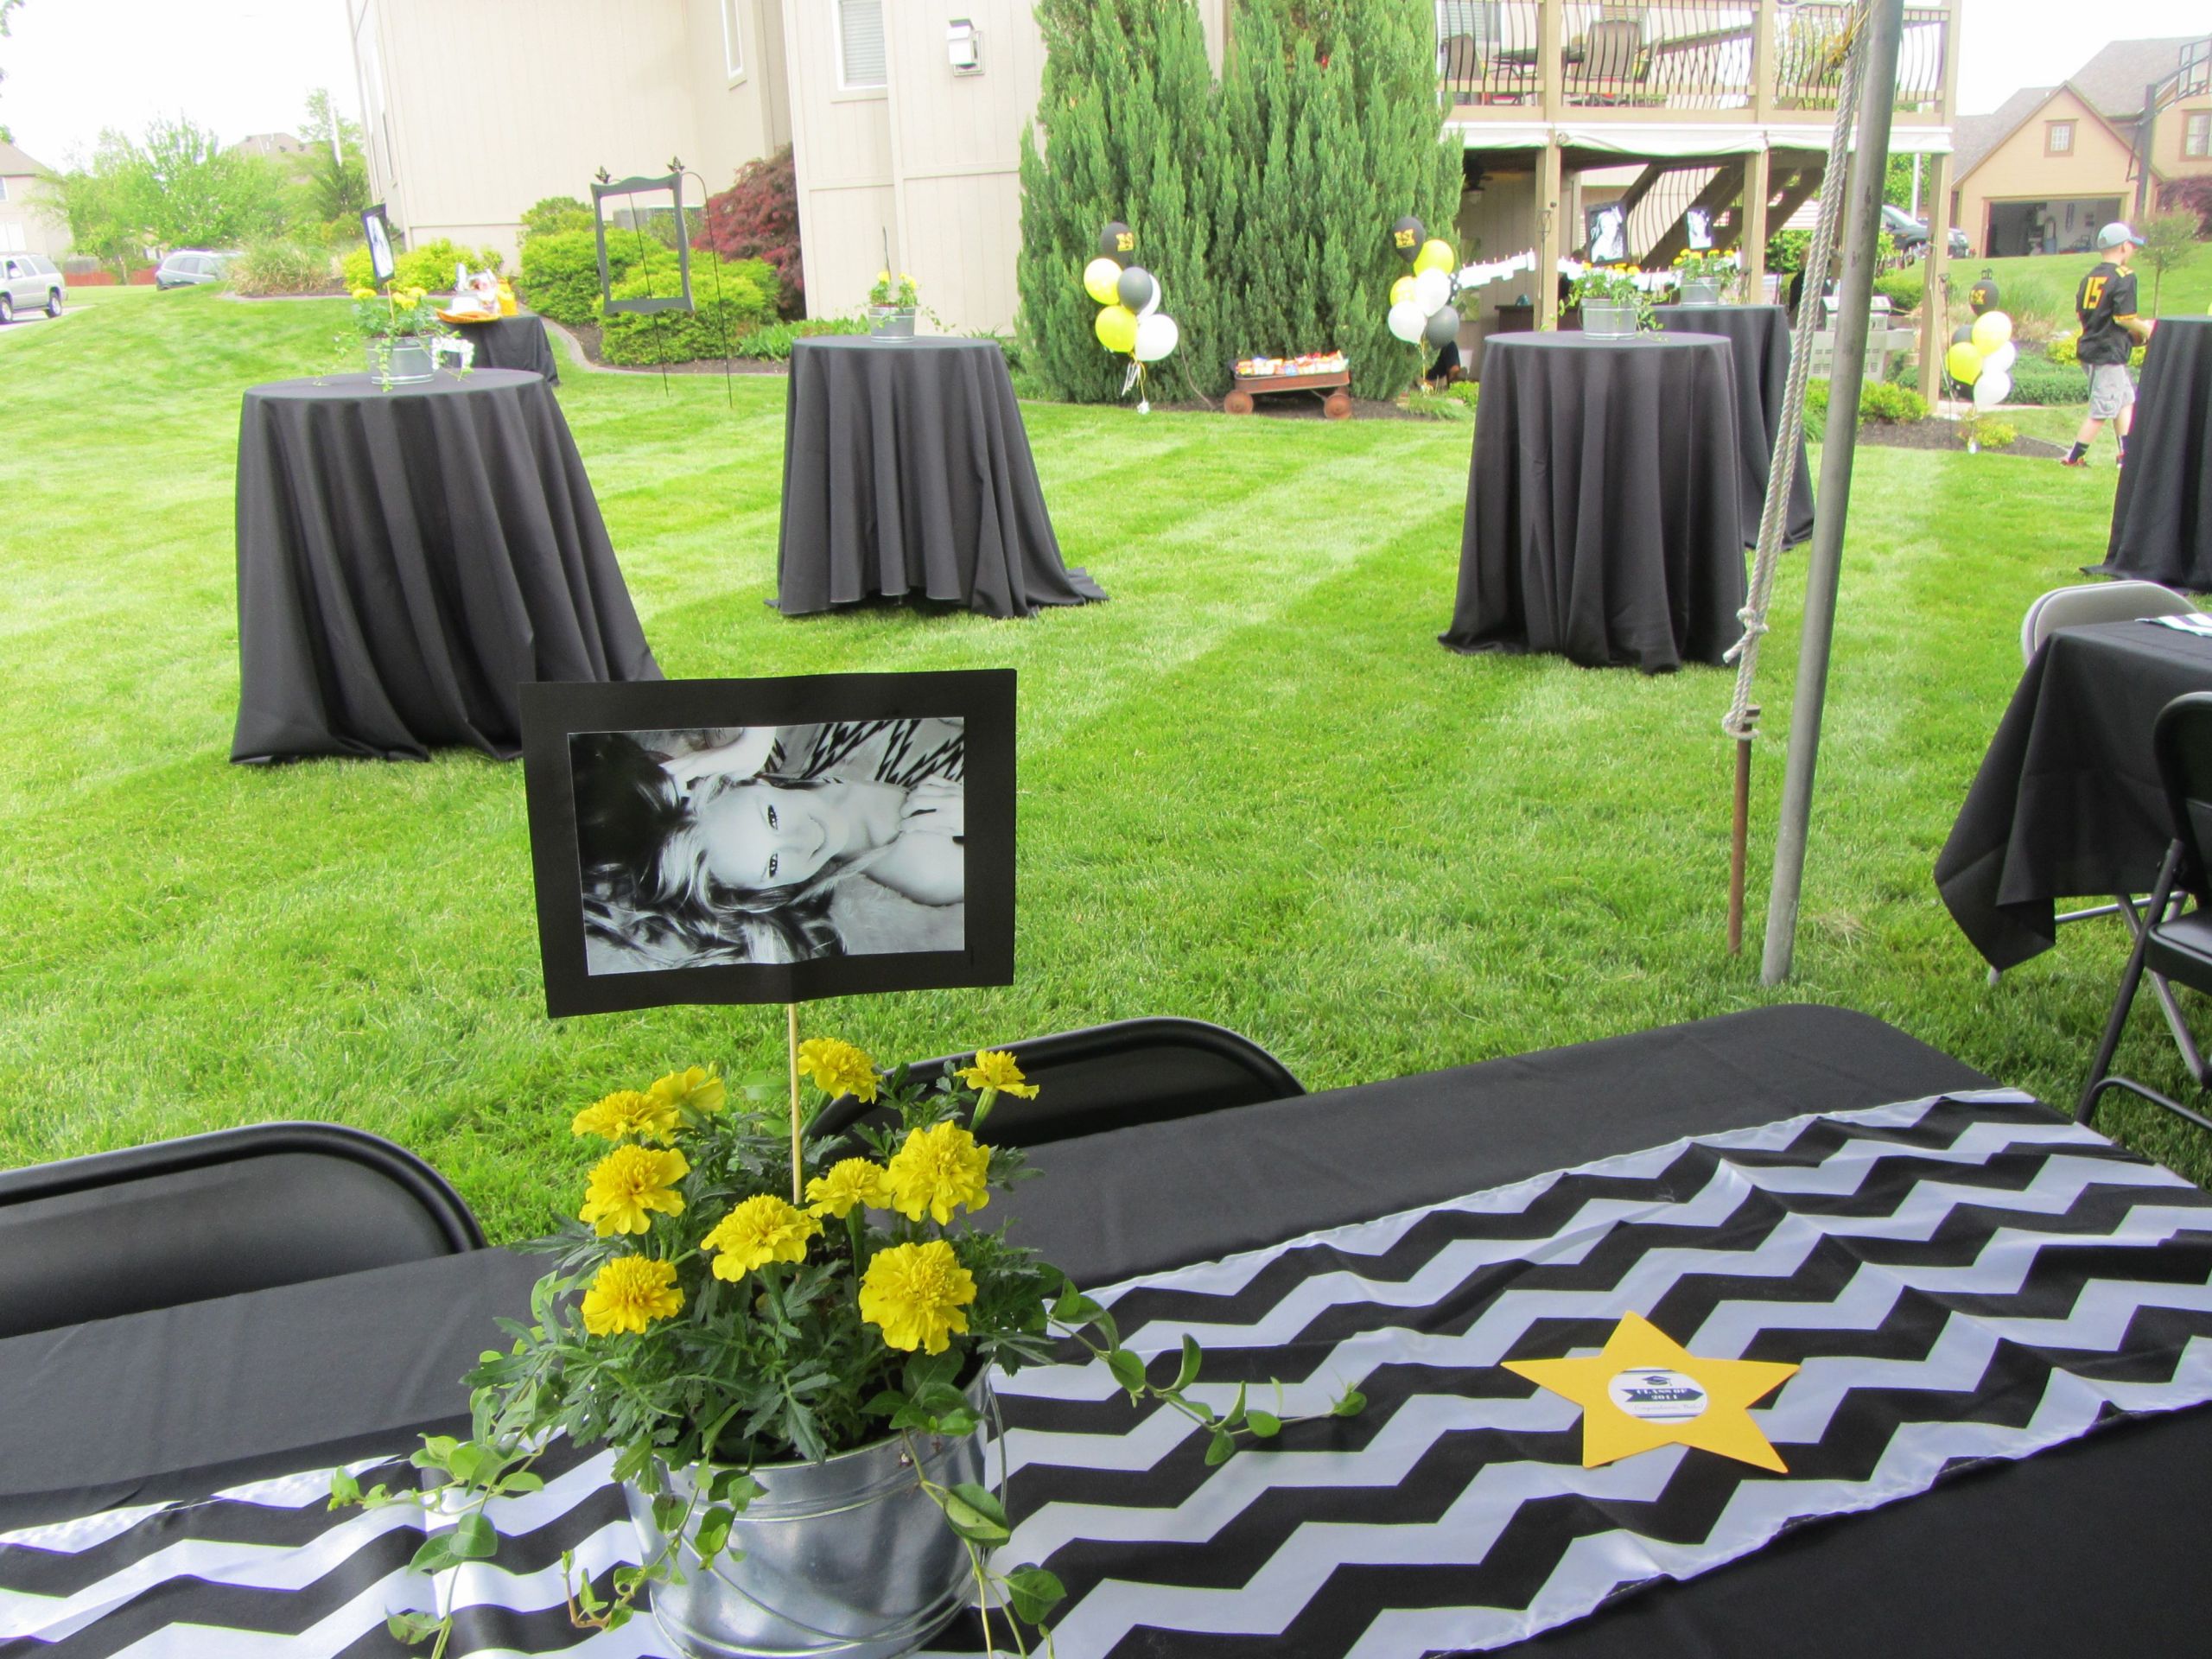 Bachelor Graduation Backyard Party Decorating Ideas
 Outdoor Graduation Party Black White Yellow